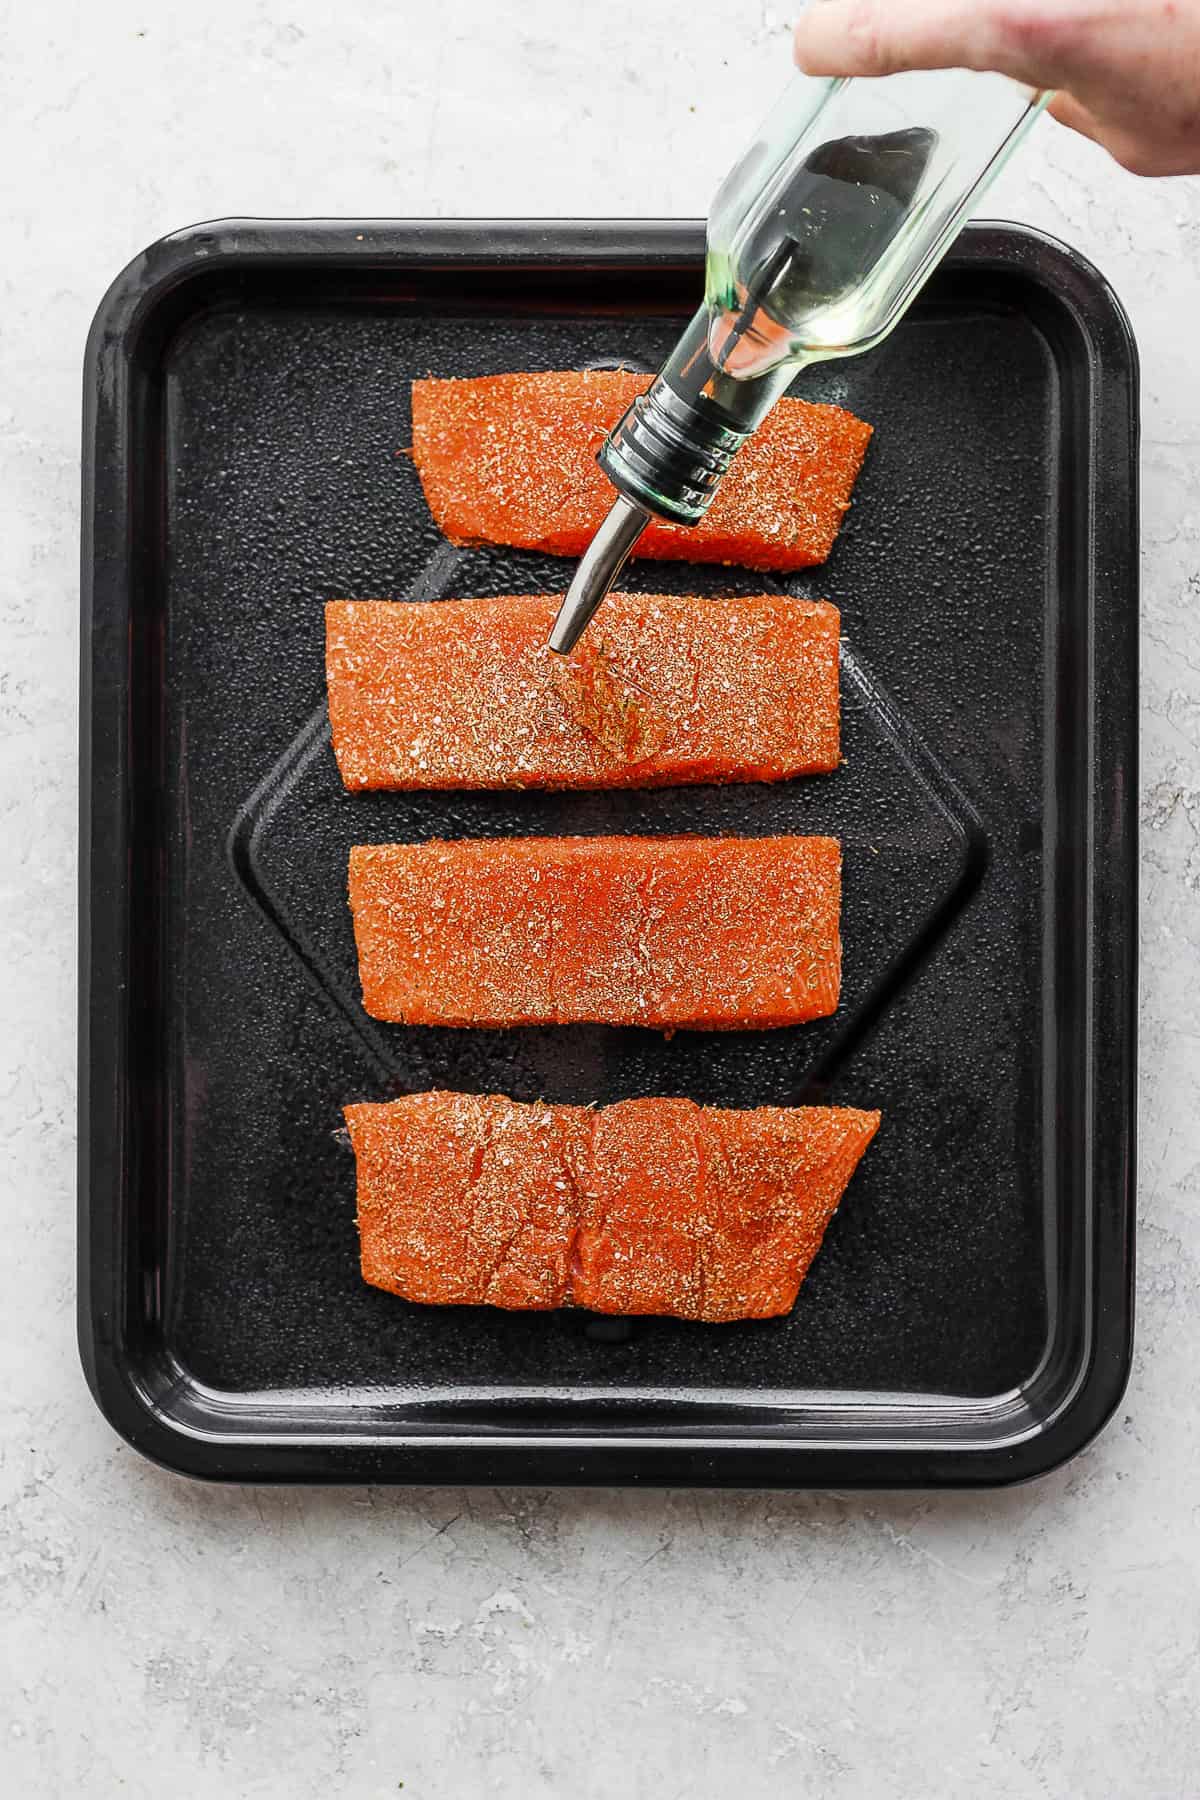 Air Fryer Salmon (10-Minute Recipe!) - Alphafoodie